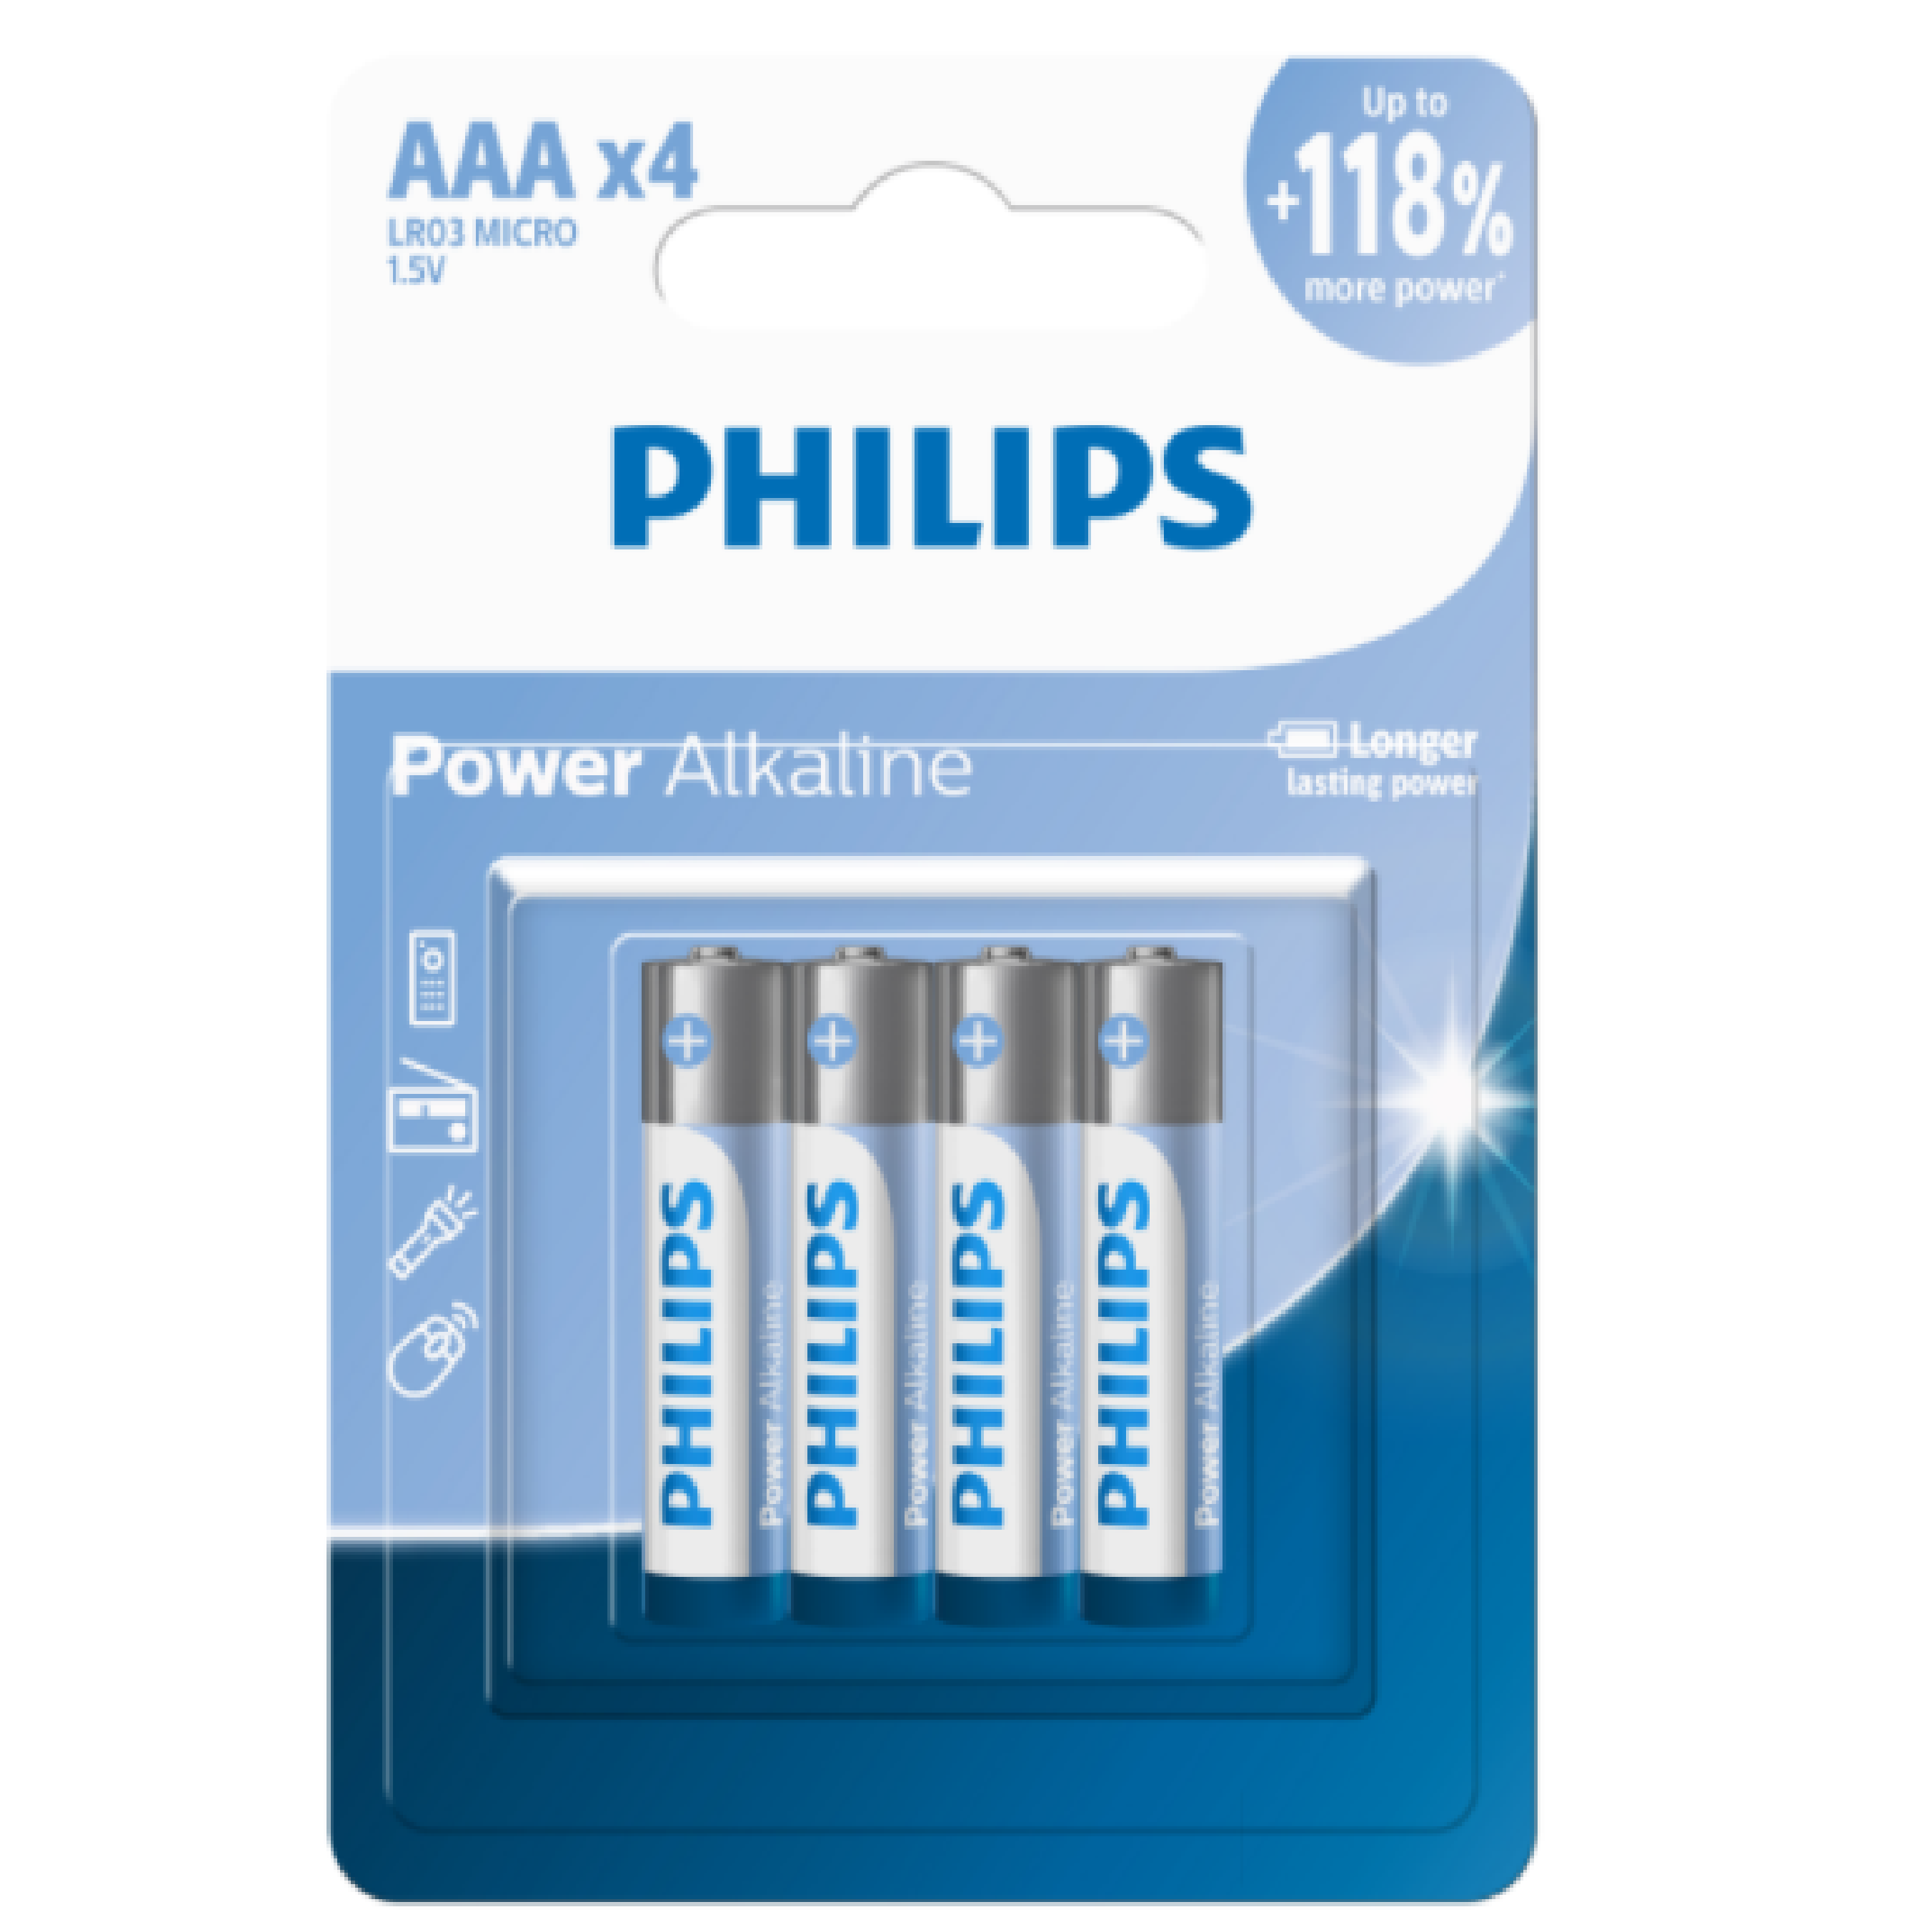 Philips 4 X AAA Power Alkaline Battery 4PC/PACK